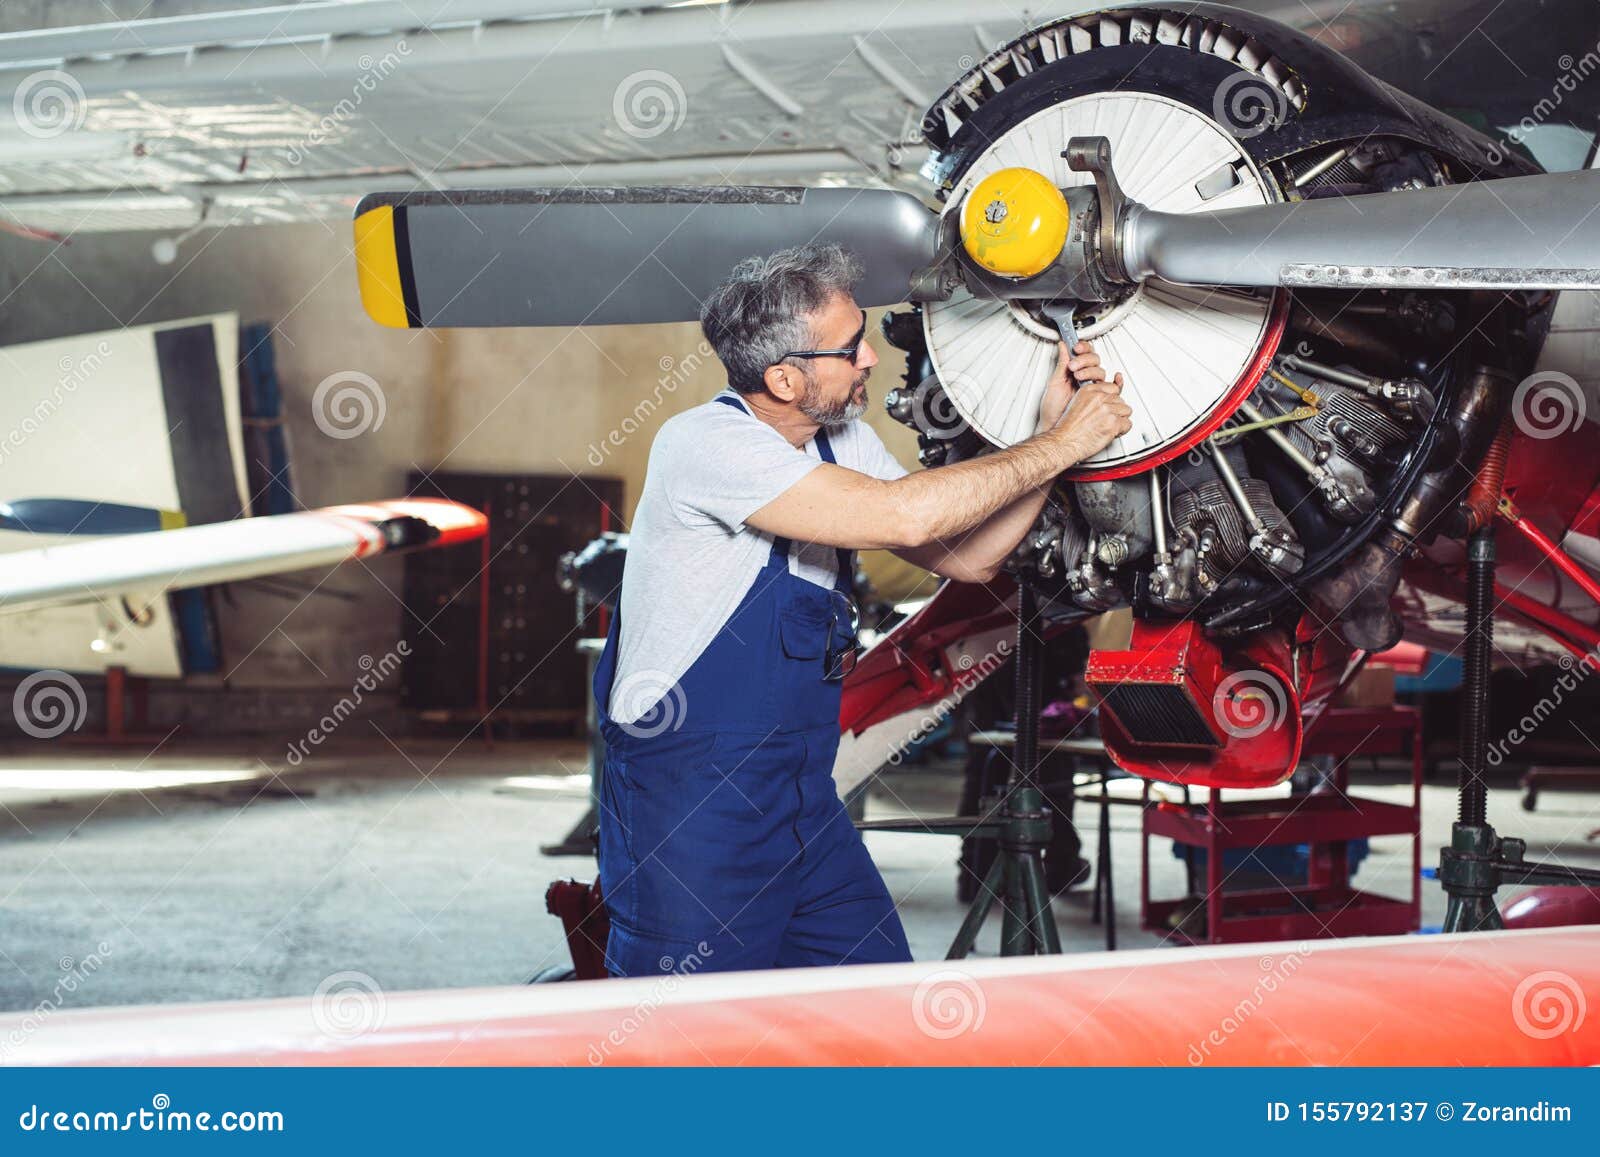 Aircraft Mechanic Repairs An Aircraft Engine In An Airport Hangar Stock Image Image Of Safety Aircraft